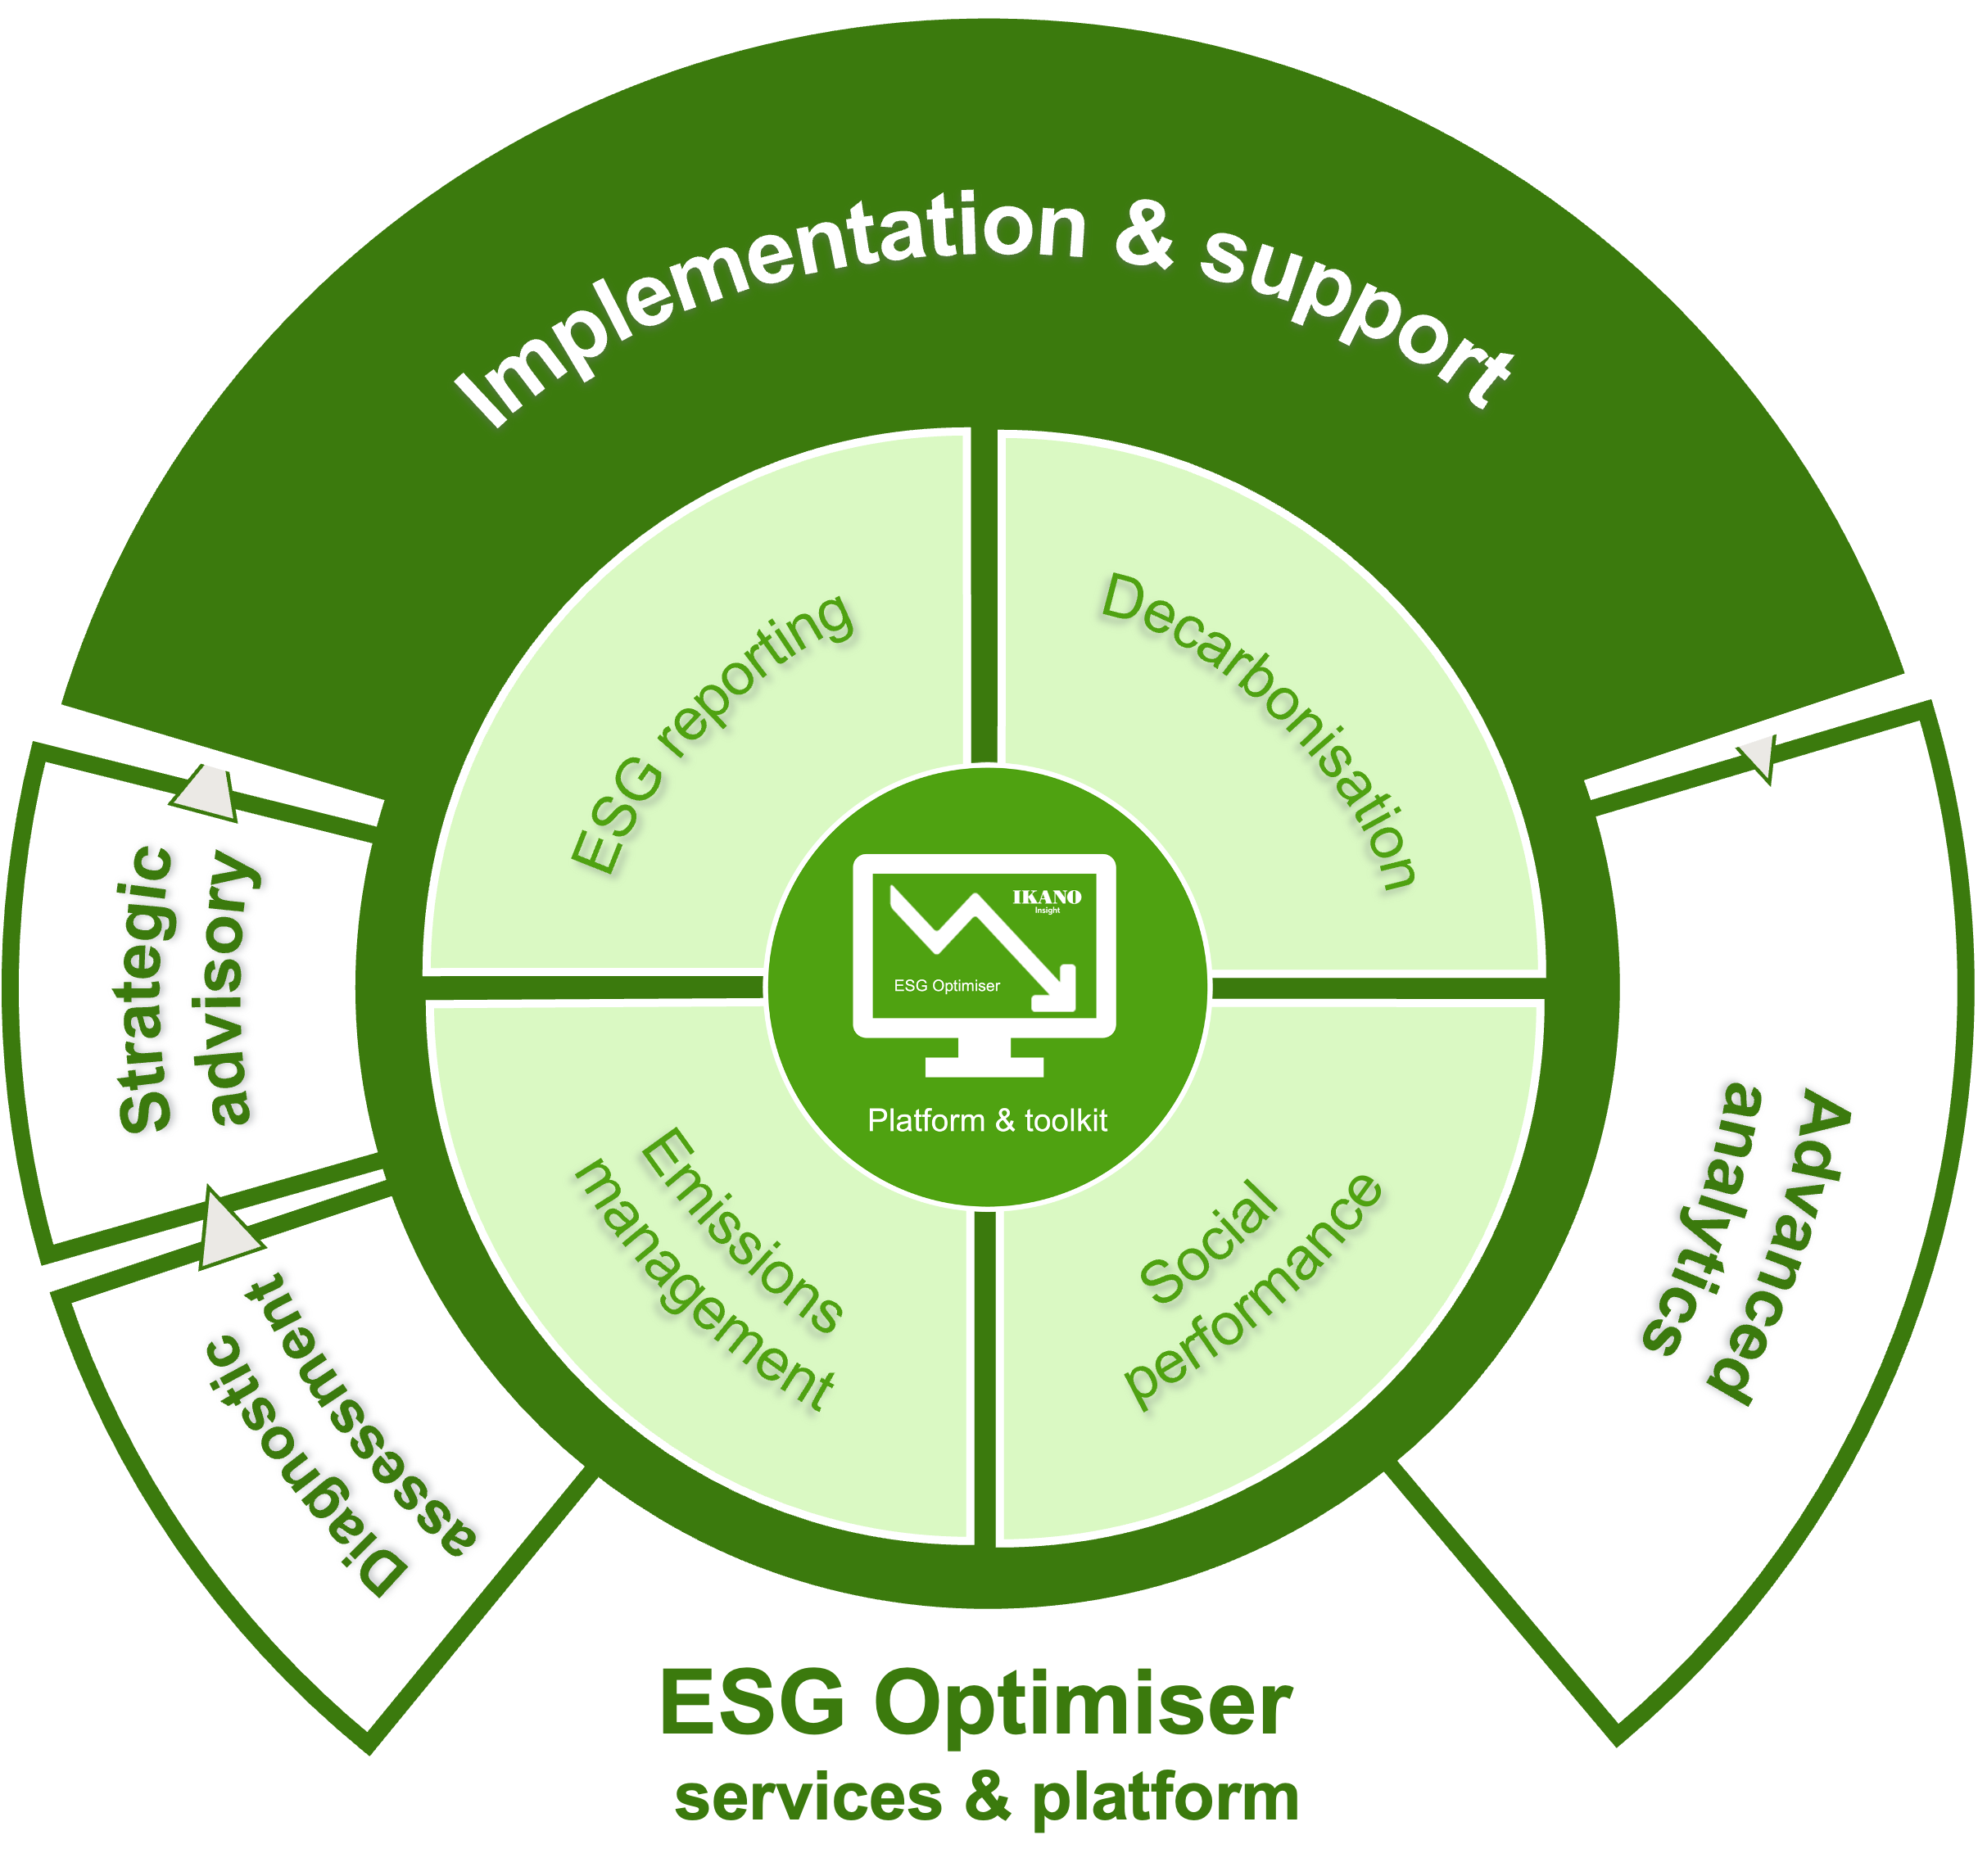 ESG Optimiser platform and services diagram